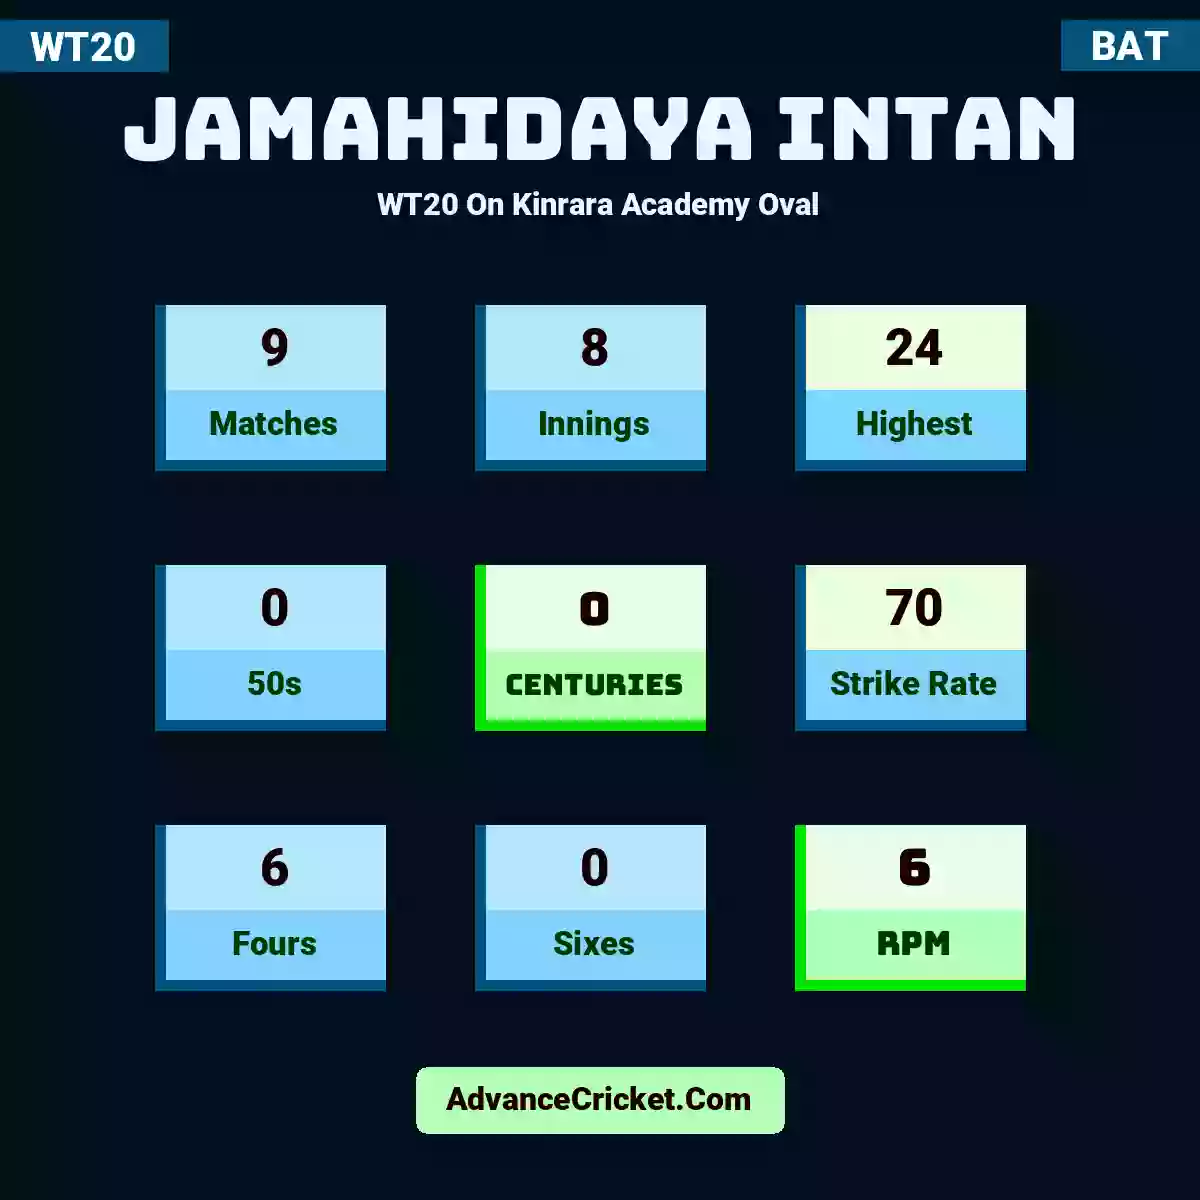 Jamahidaya Intan WT20  On Kinrara Academy Oval, Jamahidaya Intan played 9 matches, scored 24 runs as highest, 0 half-centuries, and 0 centuries, with a strike rate of 70. J.Intan hit 6 fours and 0 sixes, with an RPM of 6.